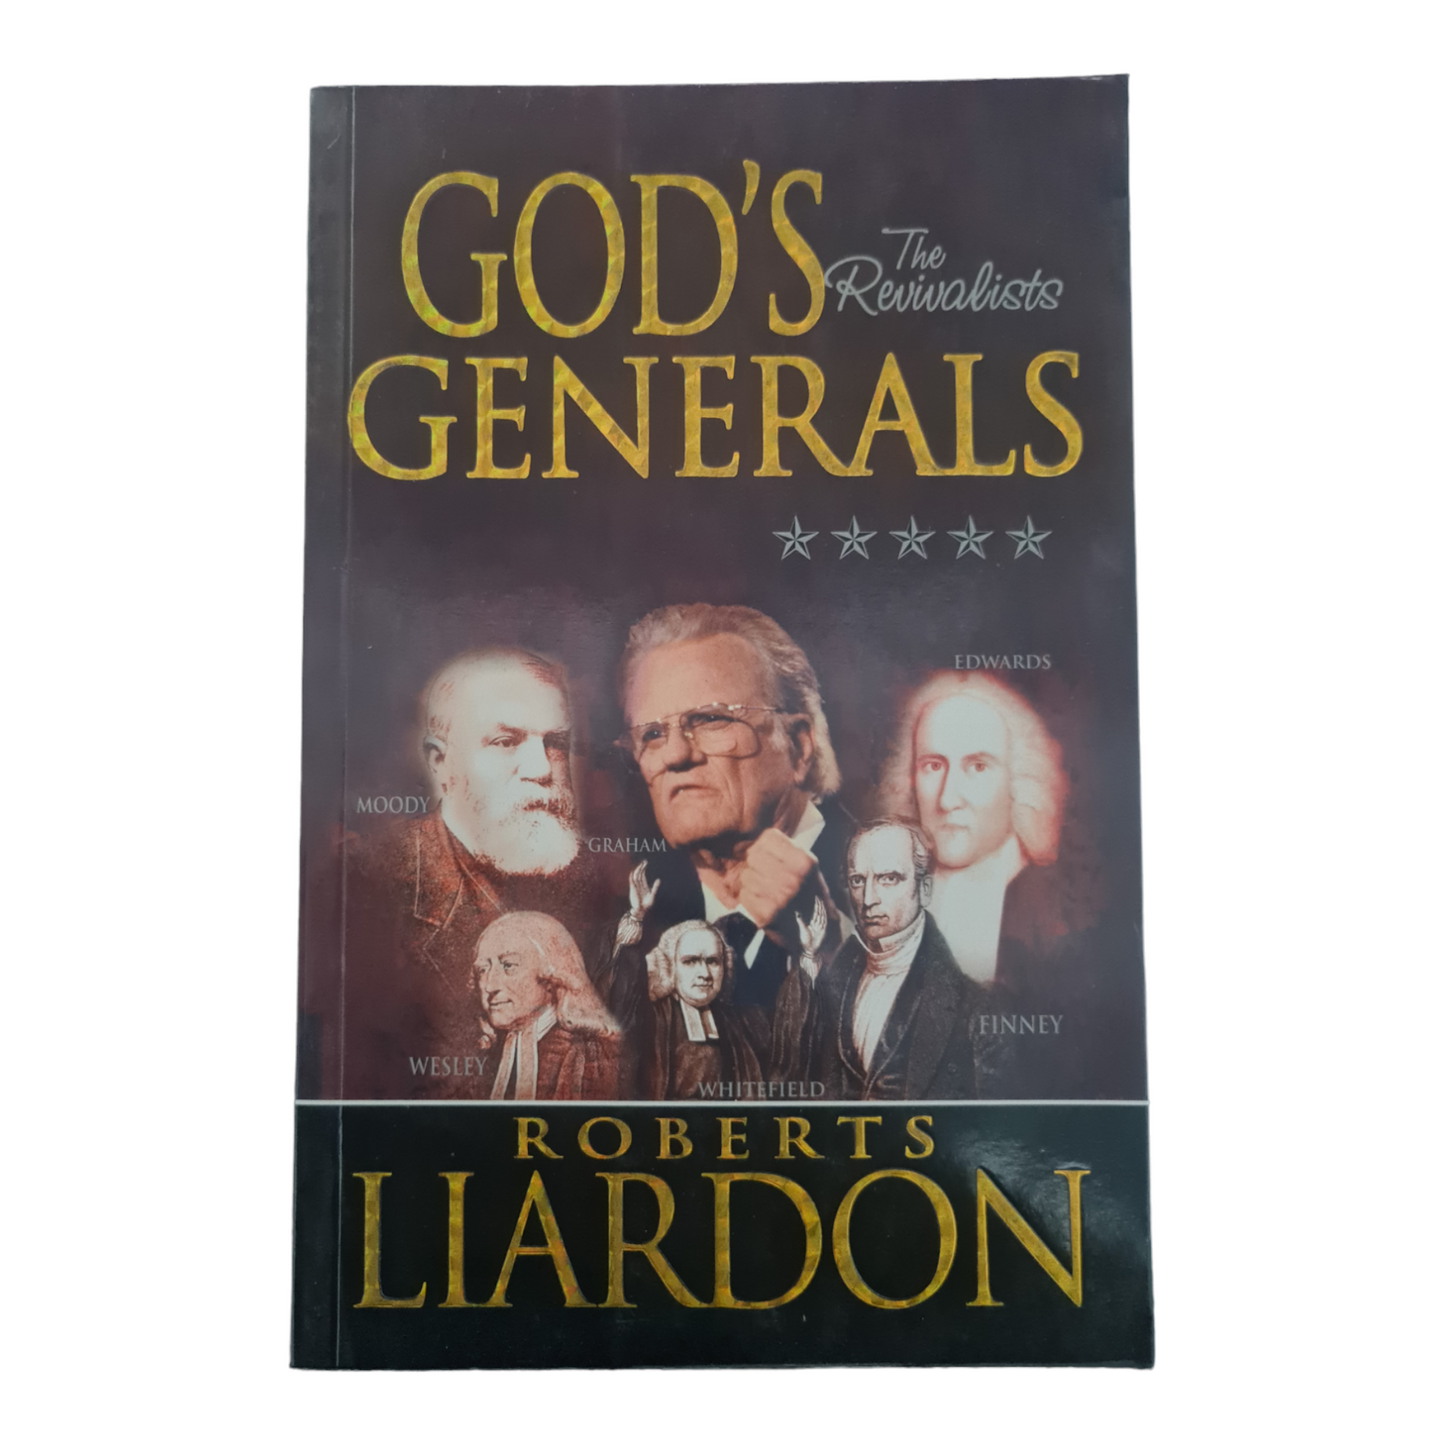 God's General by Roberts Liardon